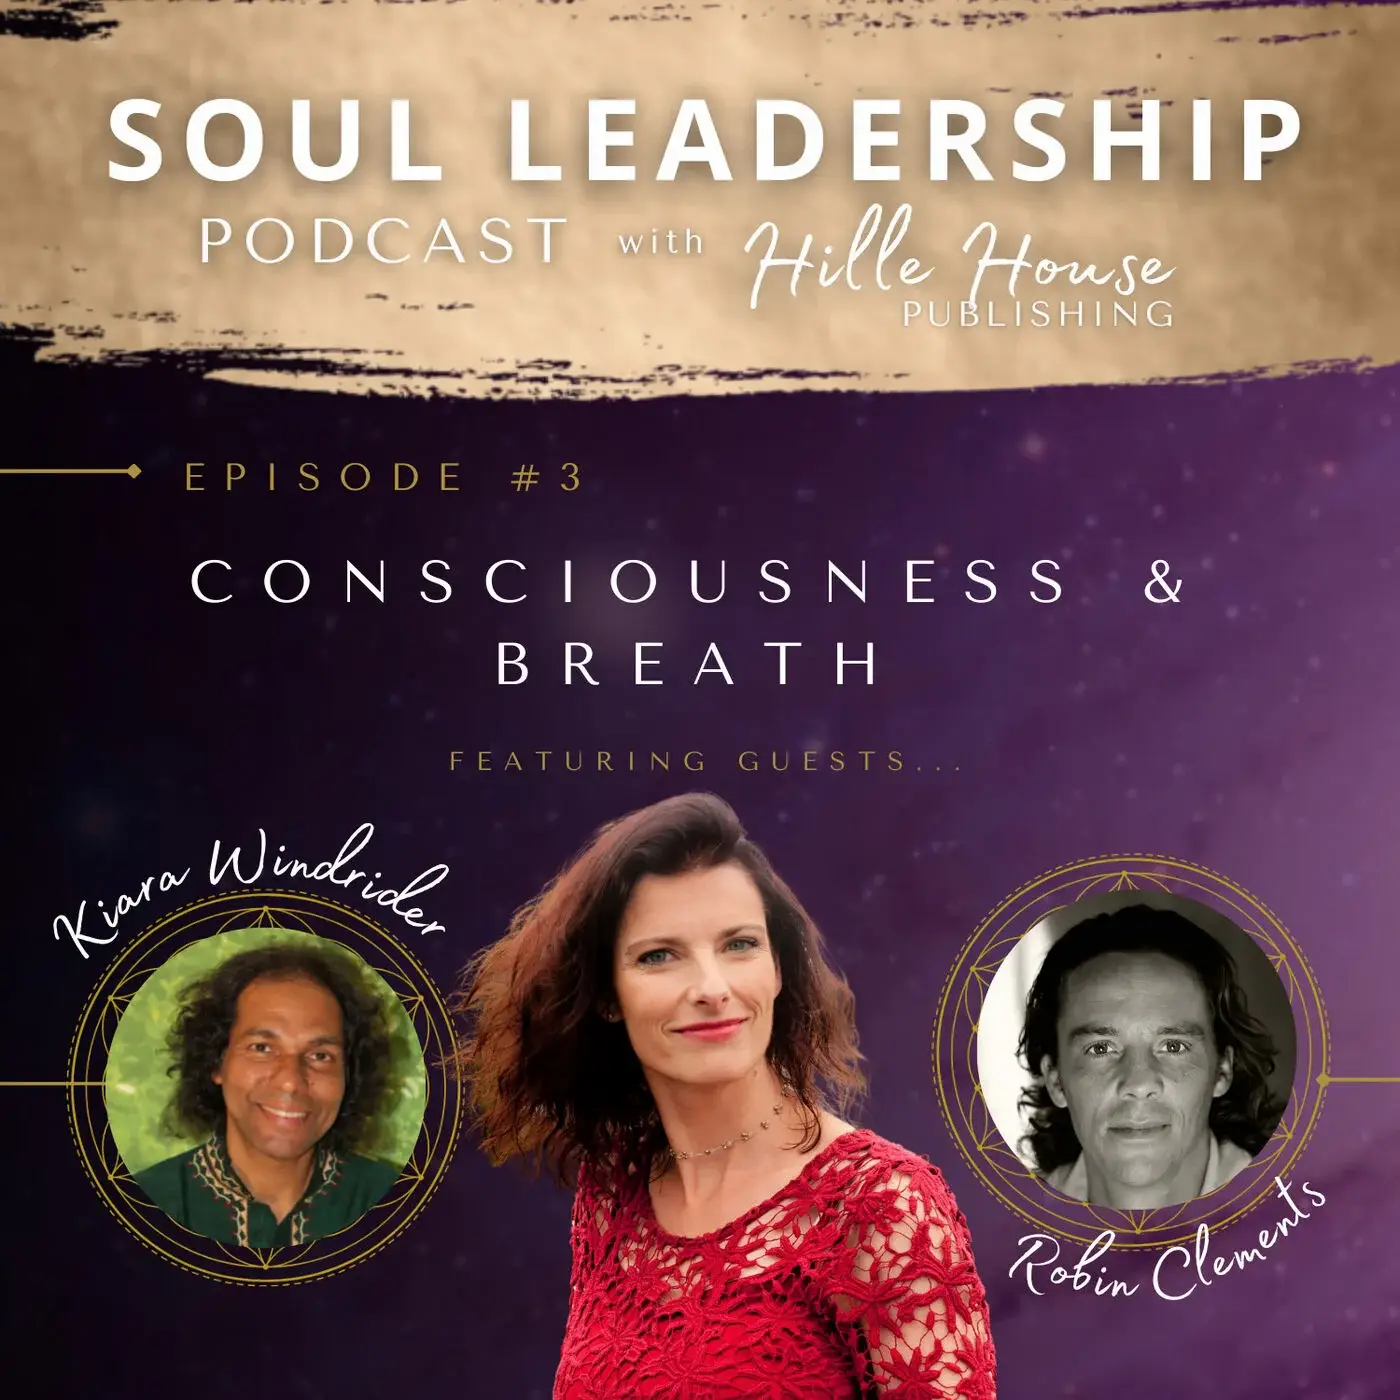 Soul Leadship Podcast